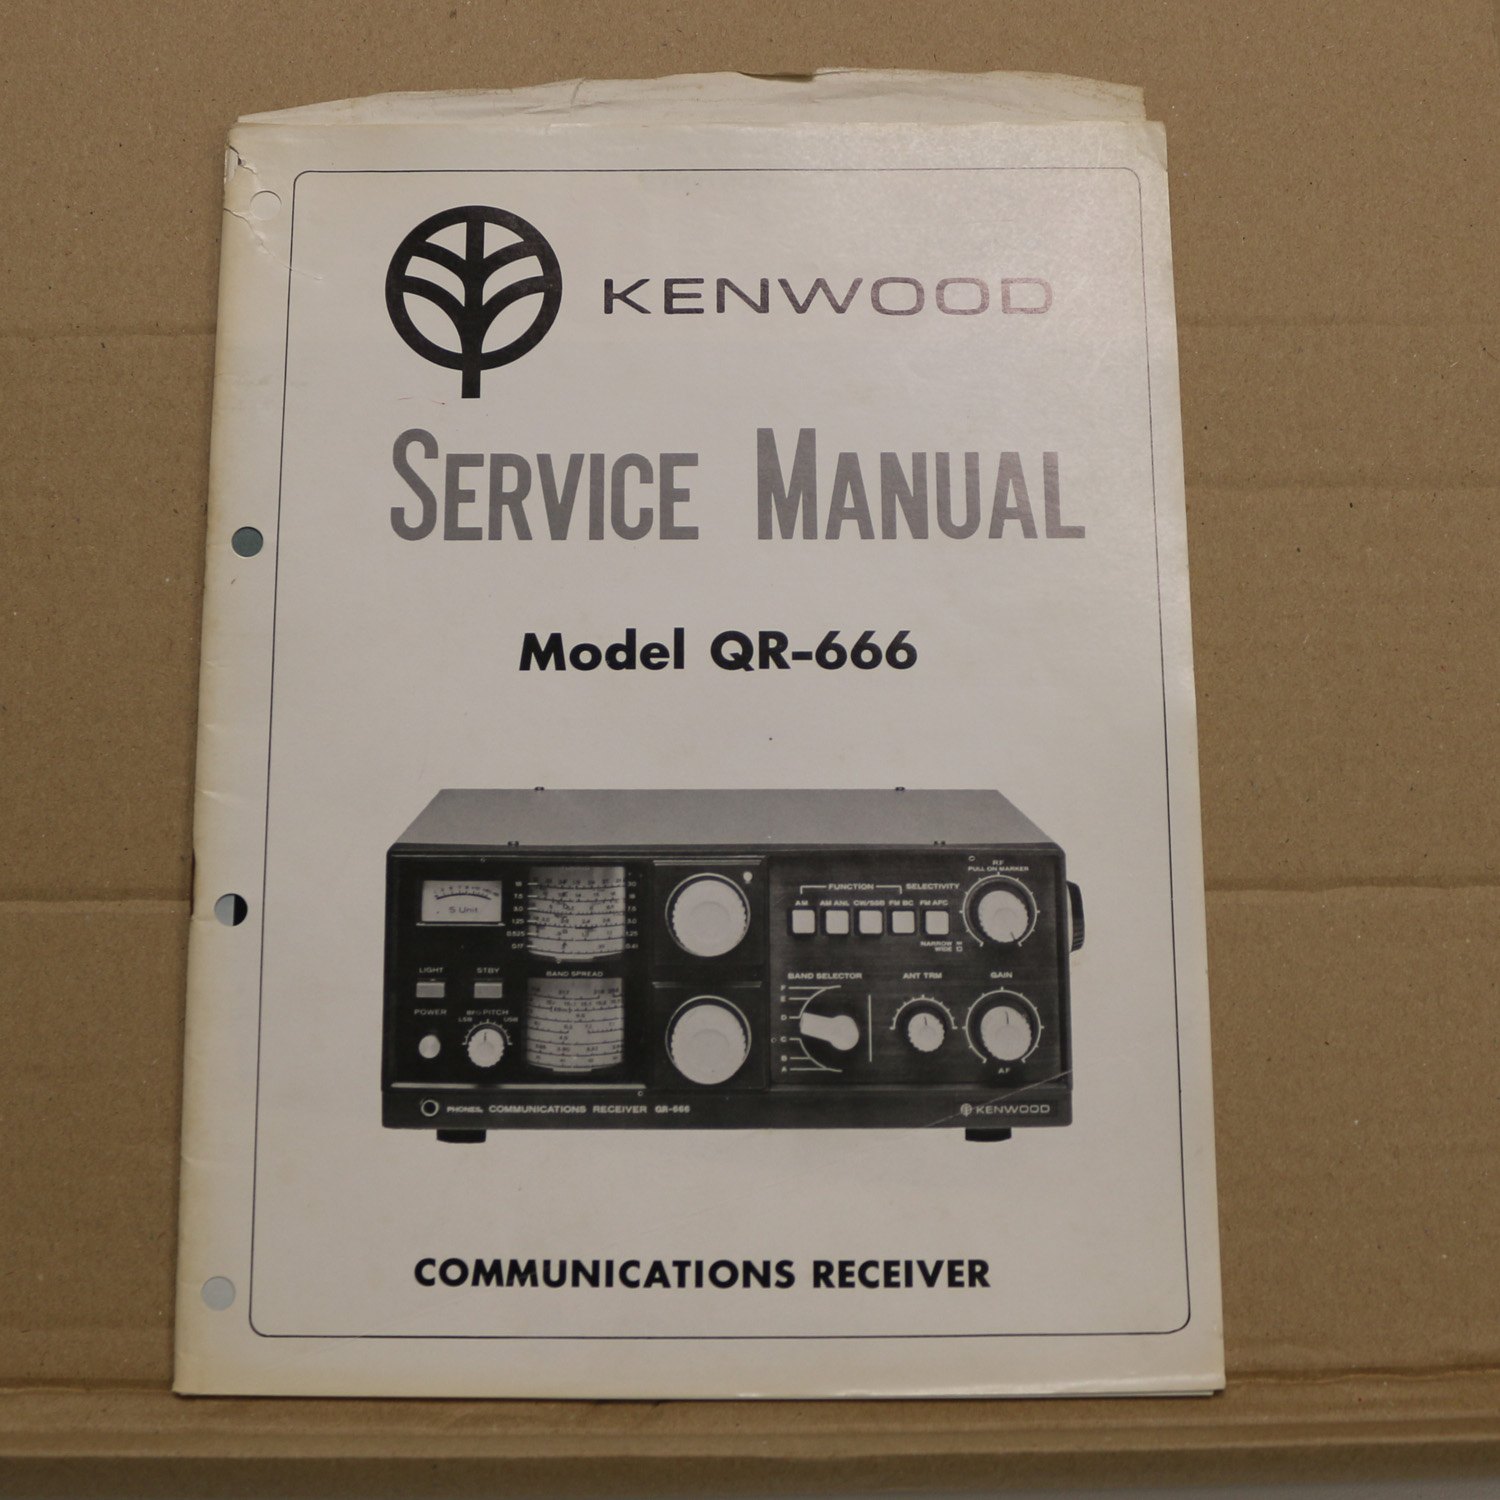 Kenwood QR-666 Service Manual